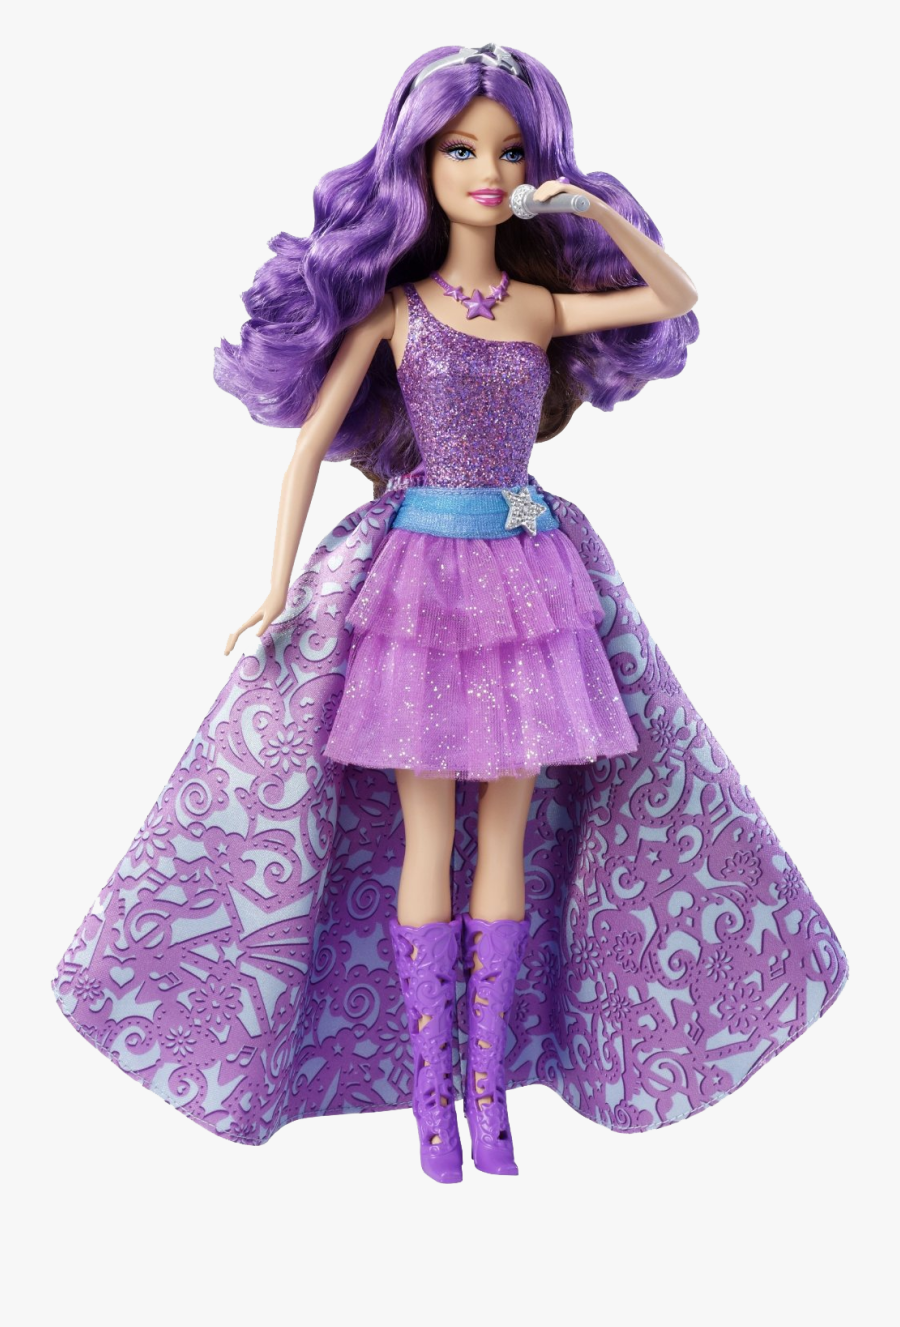 Barbie Doll Png Pic, Transparent Clipart